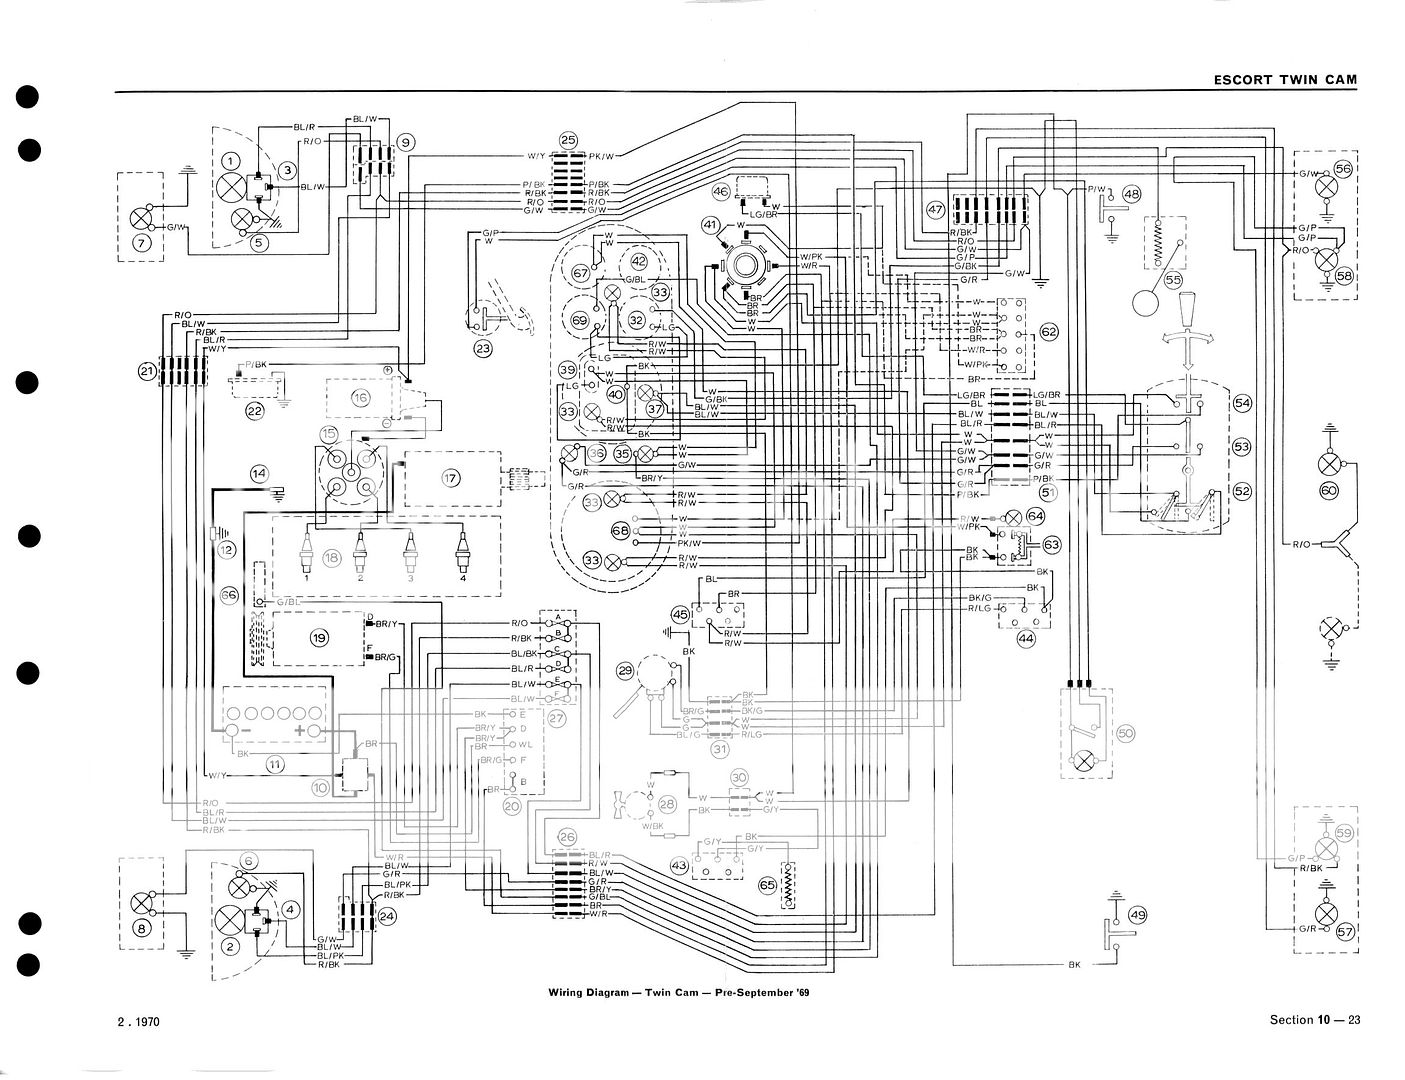 1995 Ford escort ignition wiring diagram #8